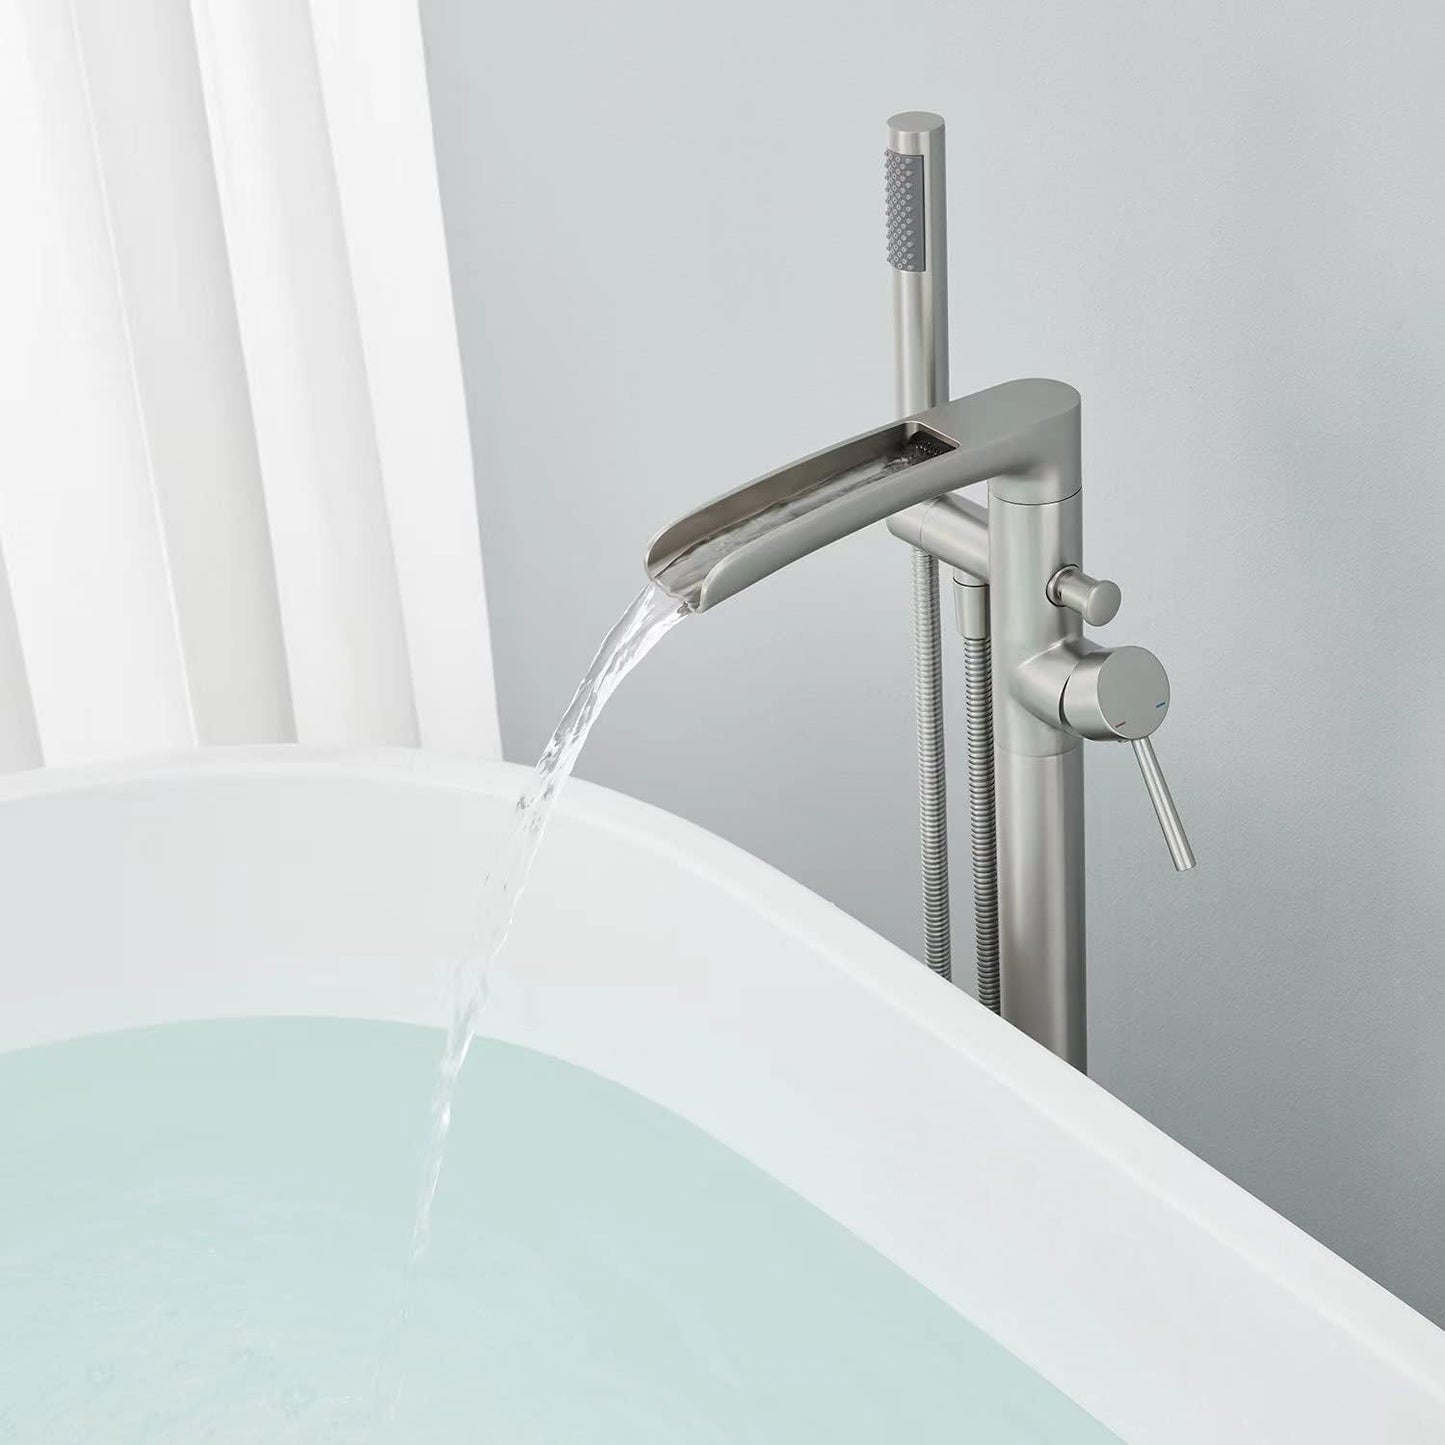 Wowkk Waterfall Freestanding Bathtub Faucet Brushed Nickel Floor Mount Tub Filler Brass Single Handle Bathroom Faucets with Hand Shower (Brushed Nickel)